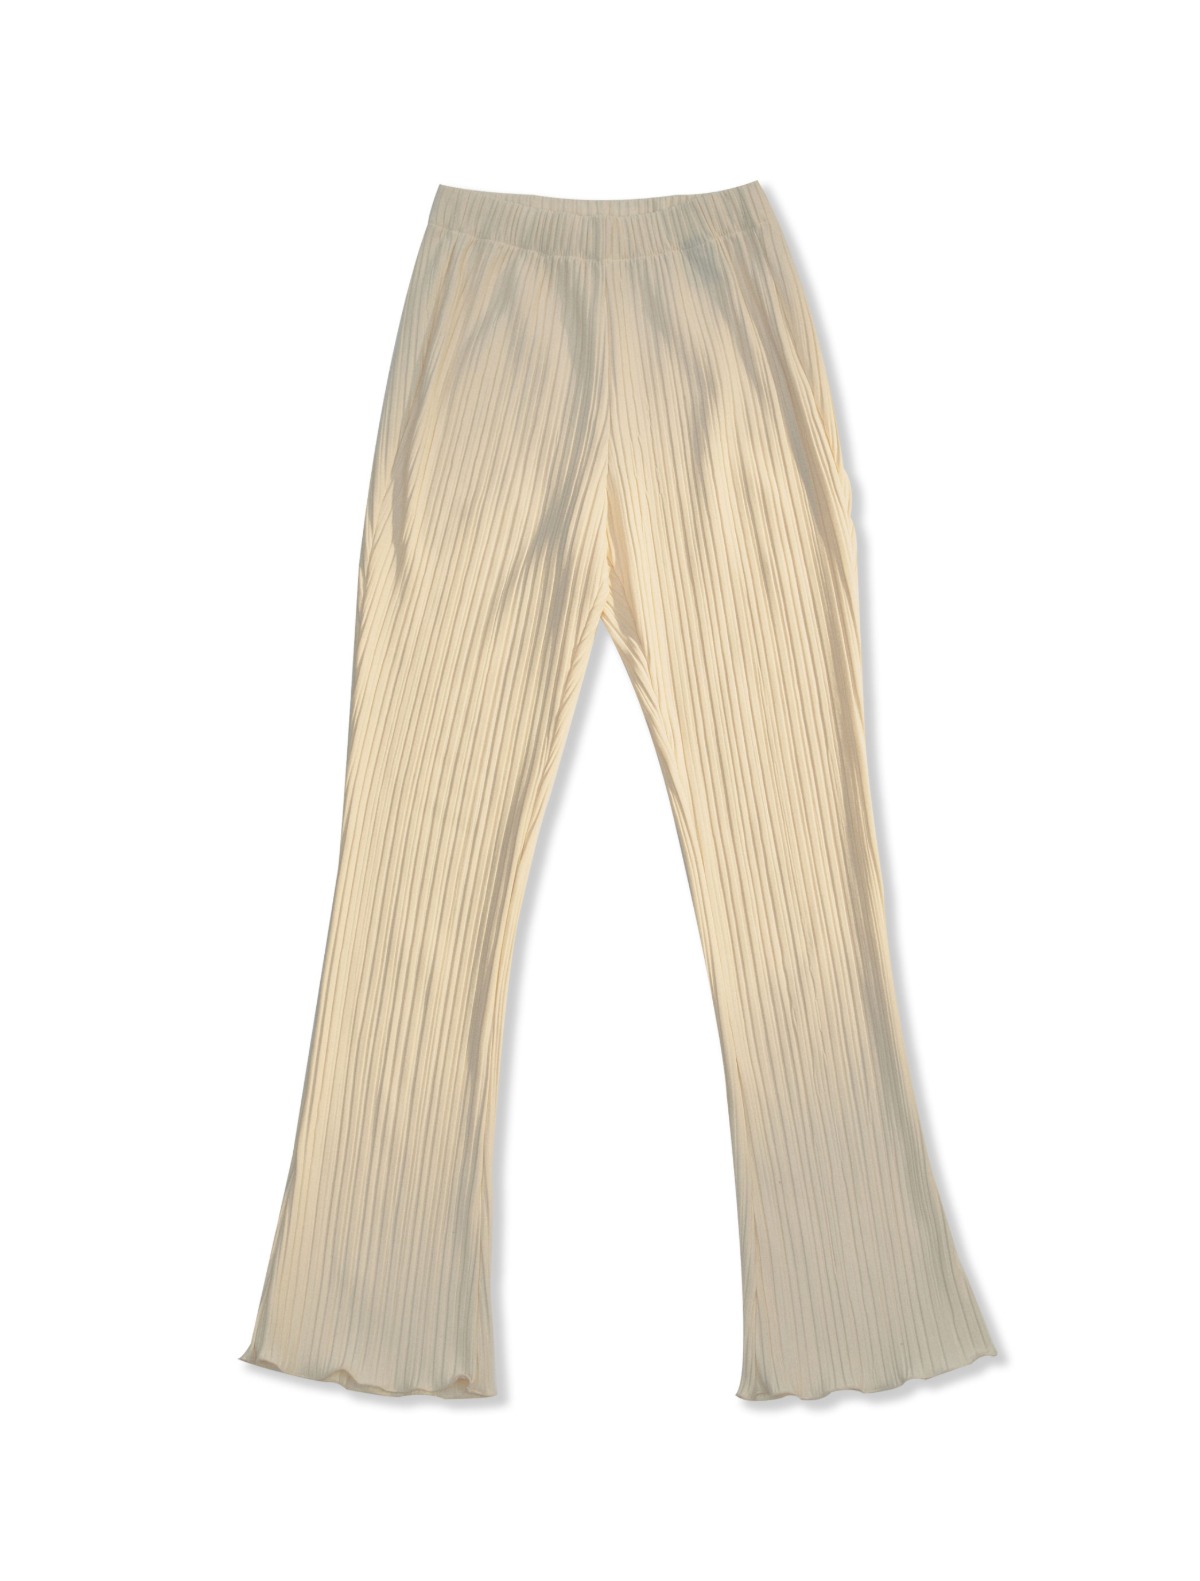 Ribbed Lounge Pants (Cream)